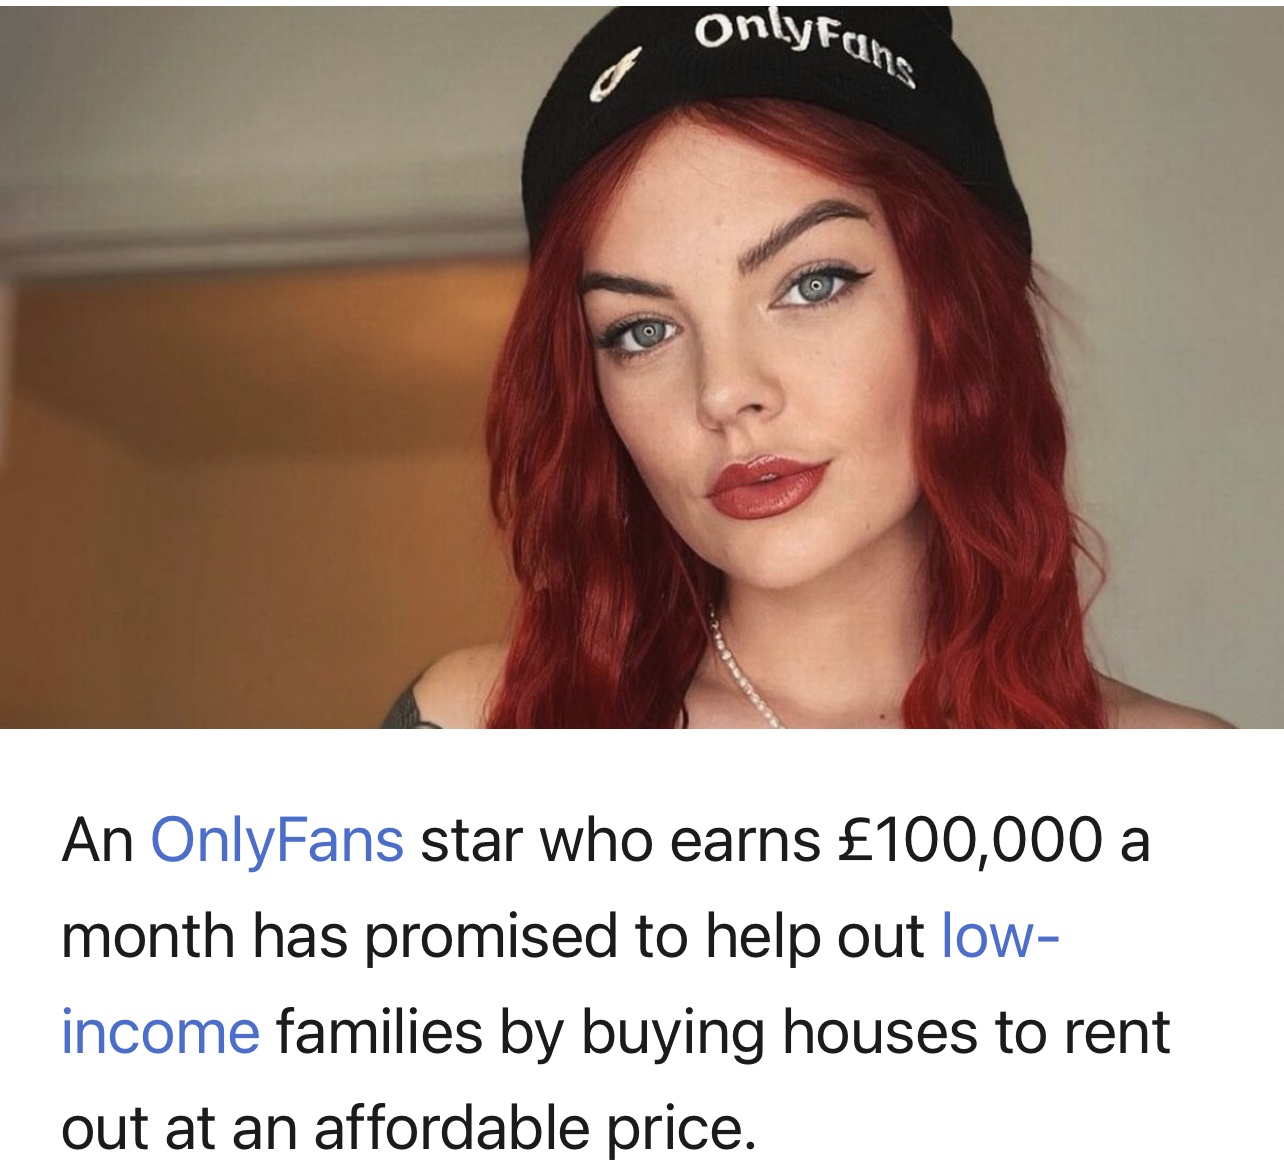 OnlyFans “Star” starts affordable housing scheme